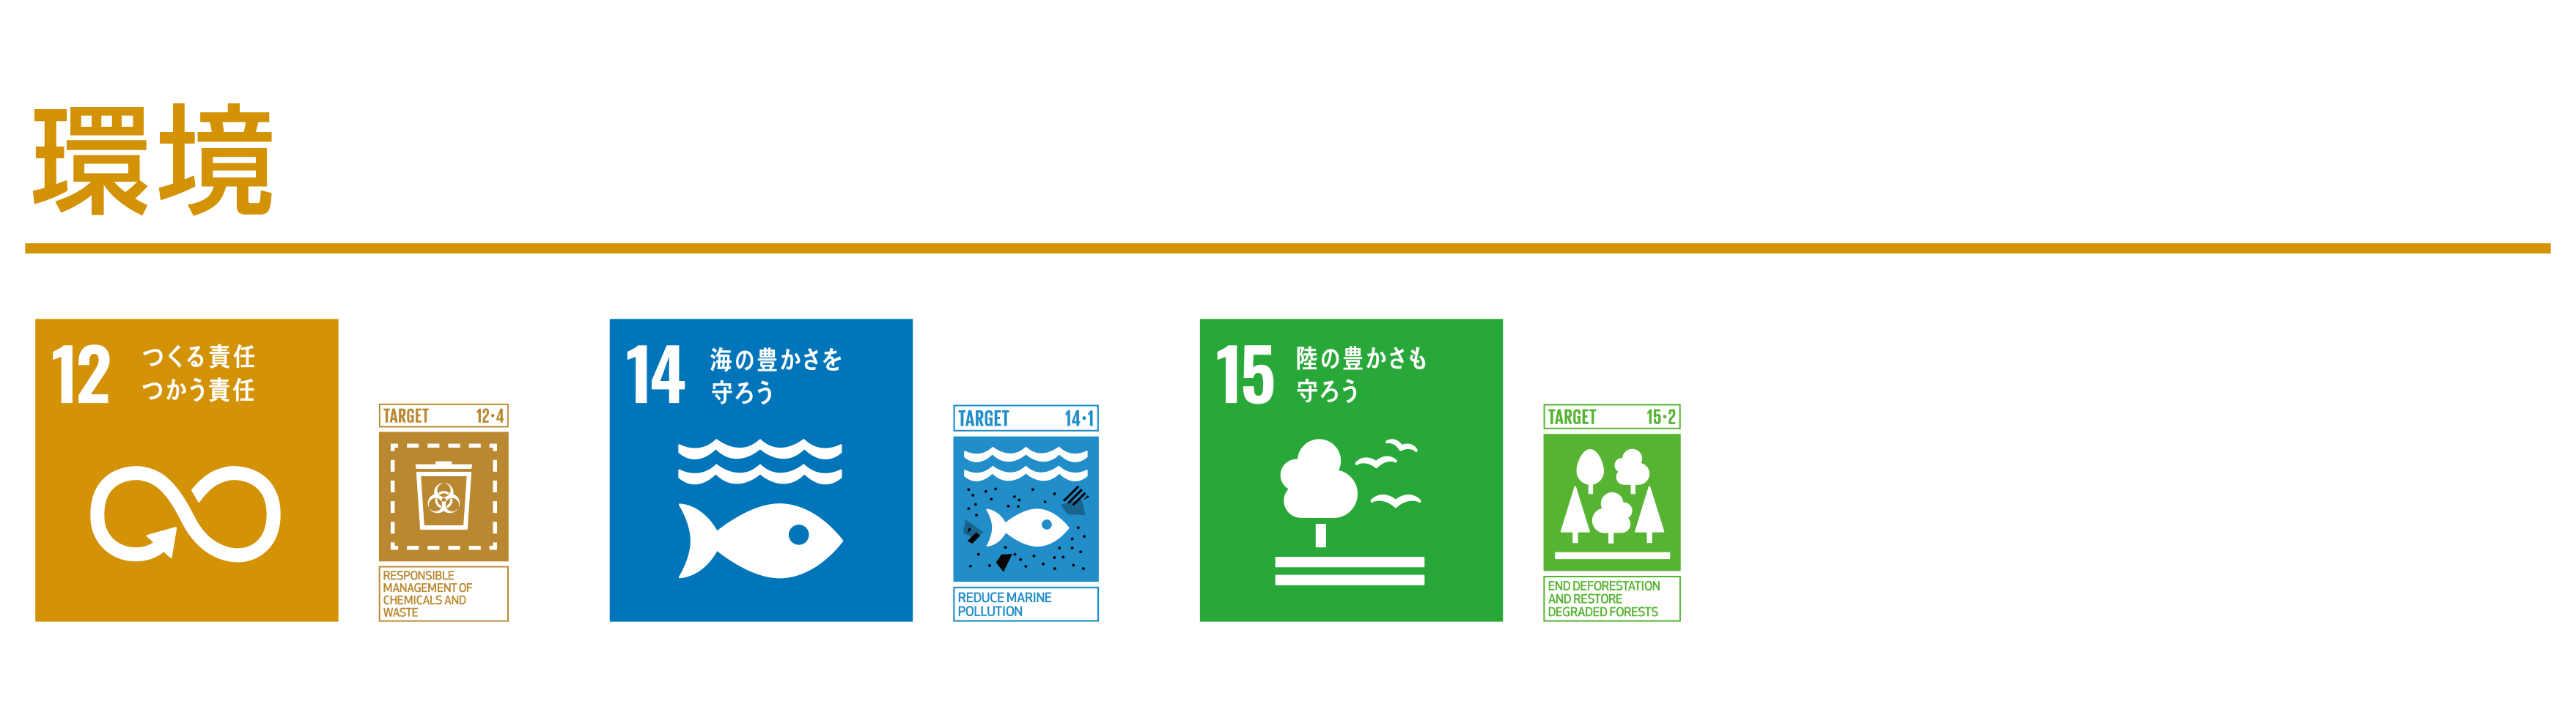 SDGs_6.jpg